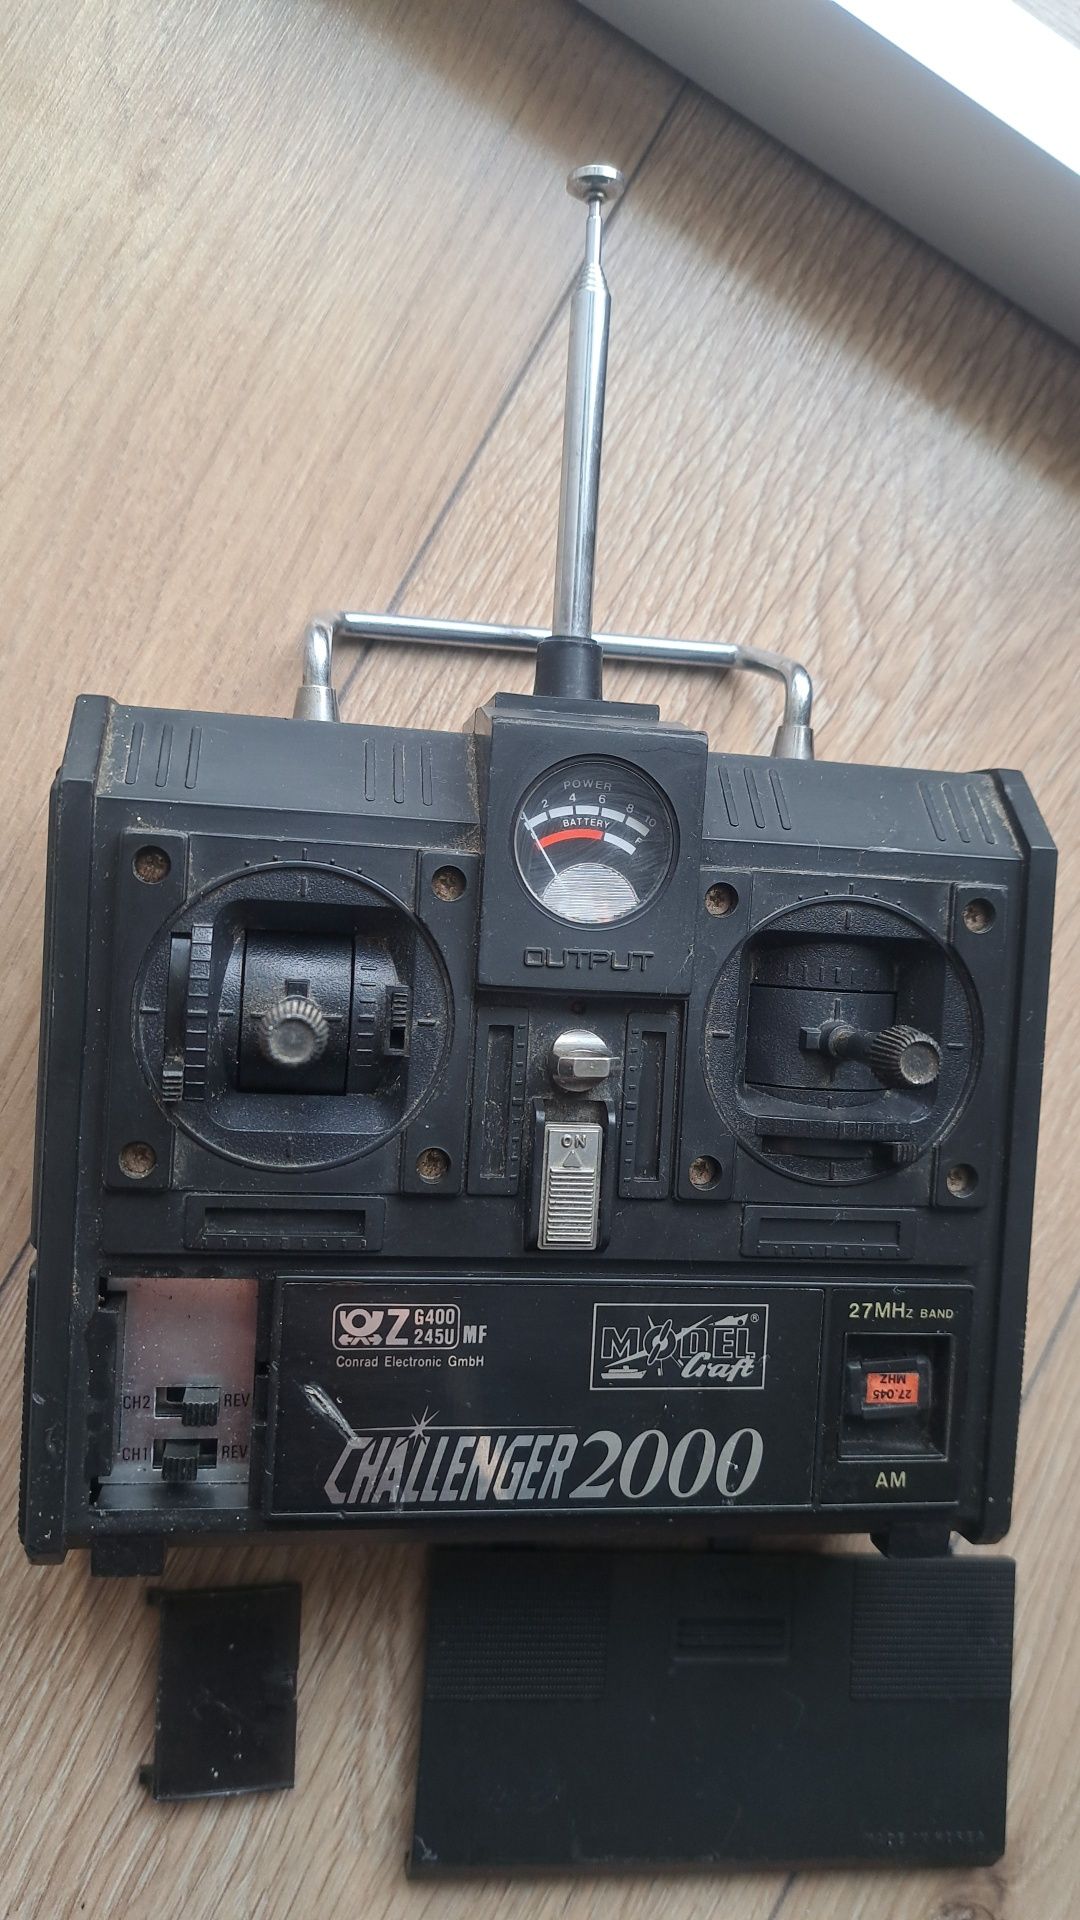 Nadajnik Challenger 2000 27MHz